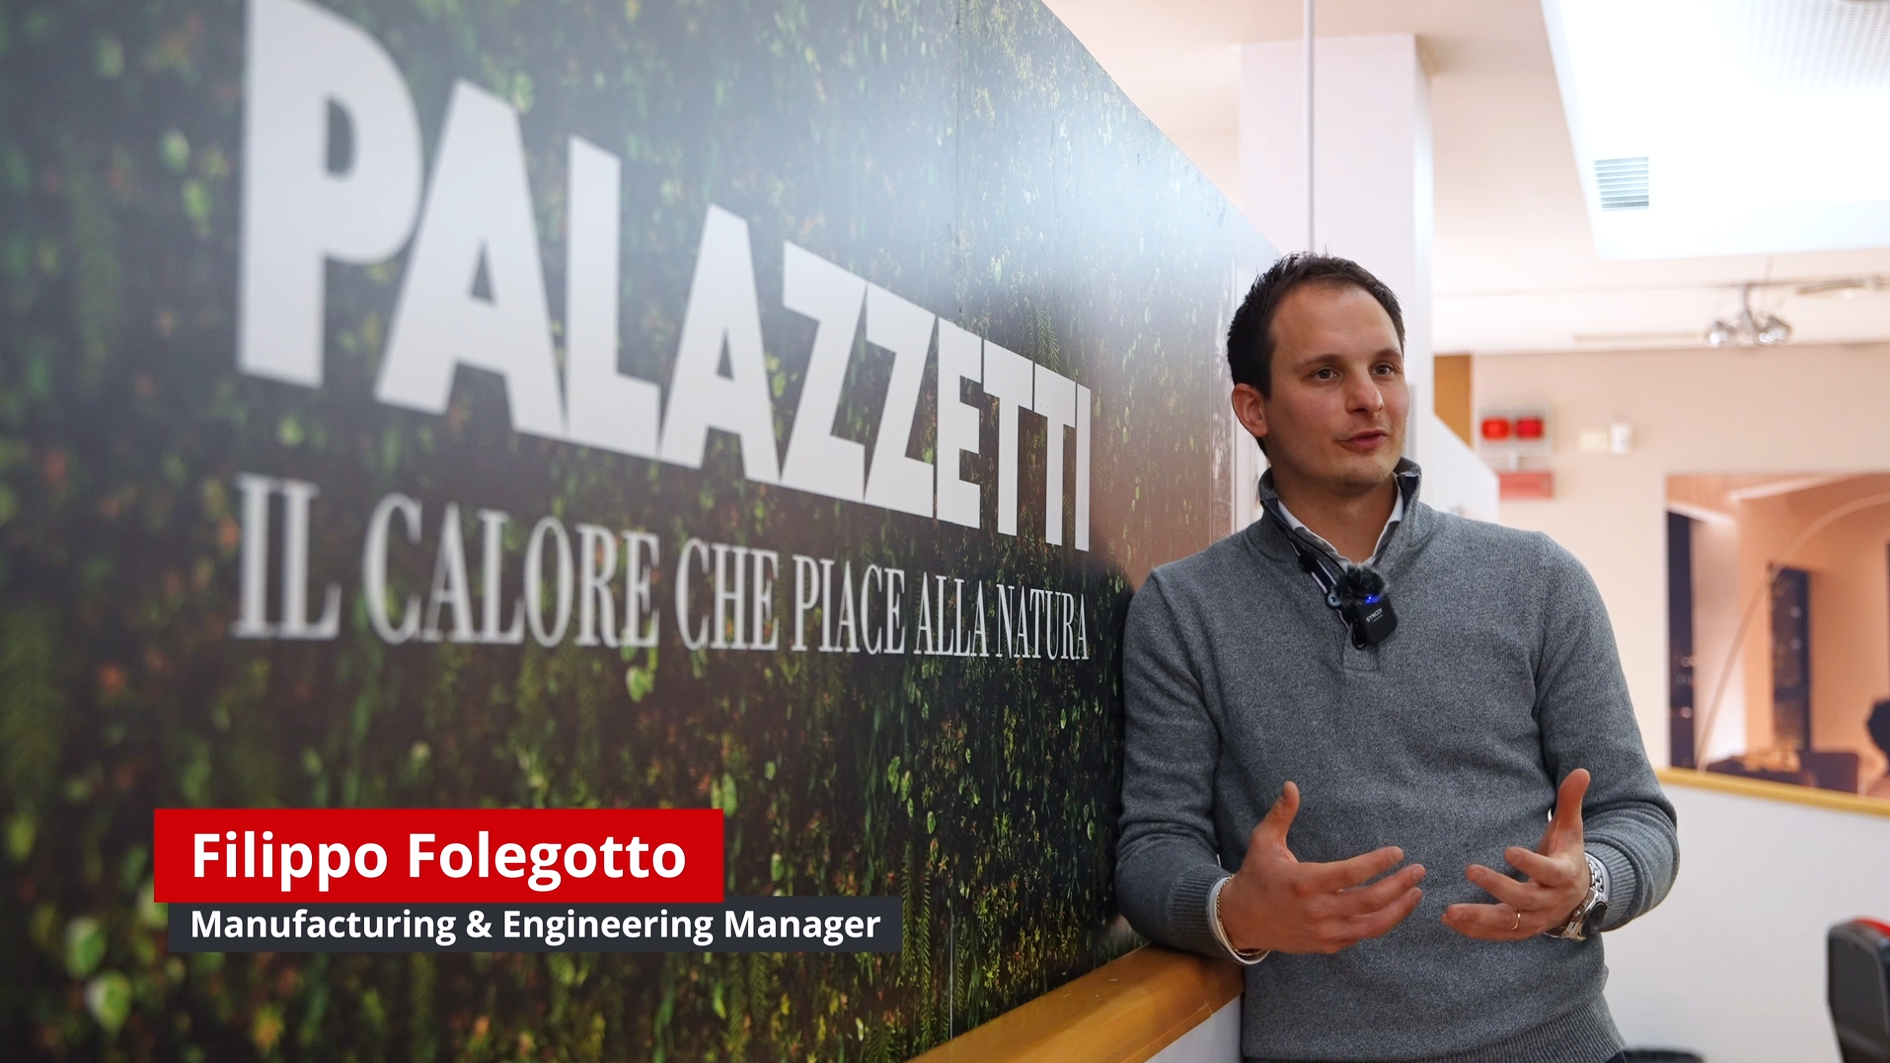 Production Manager Filippo Folegotto